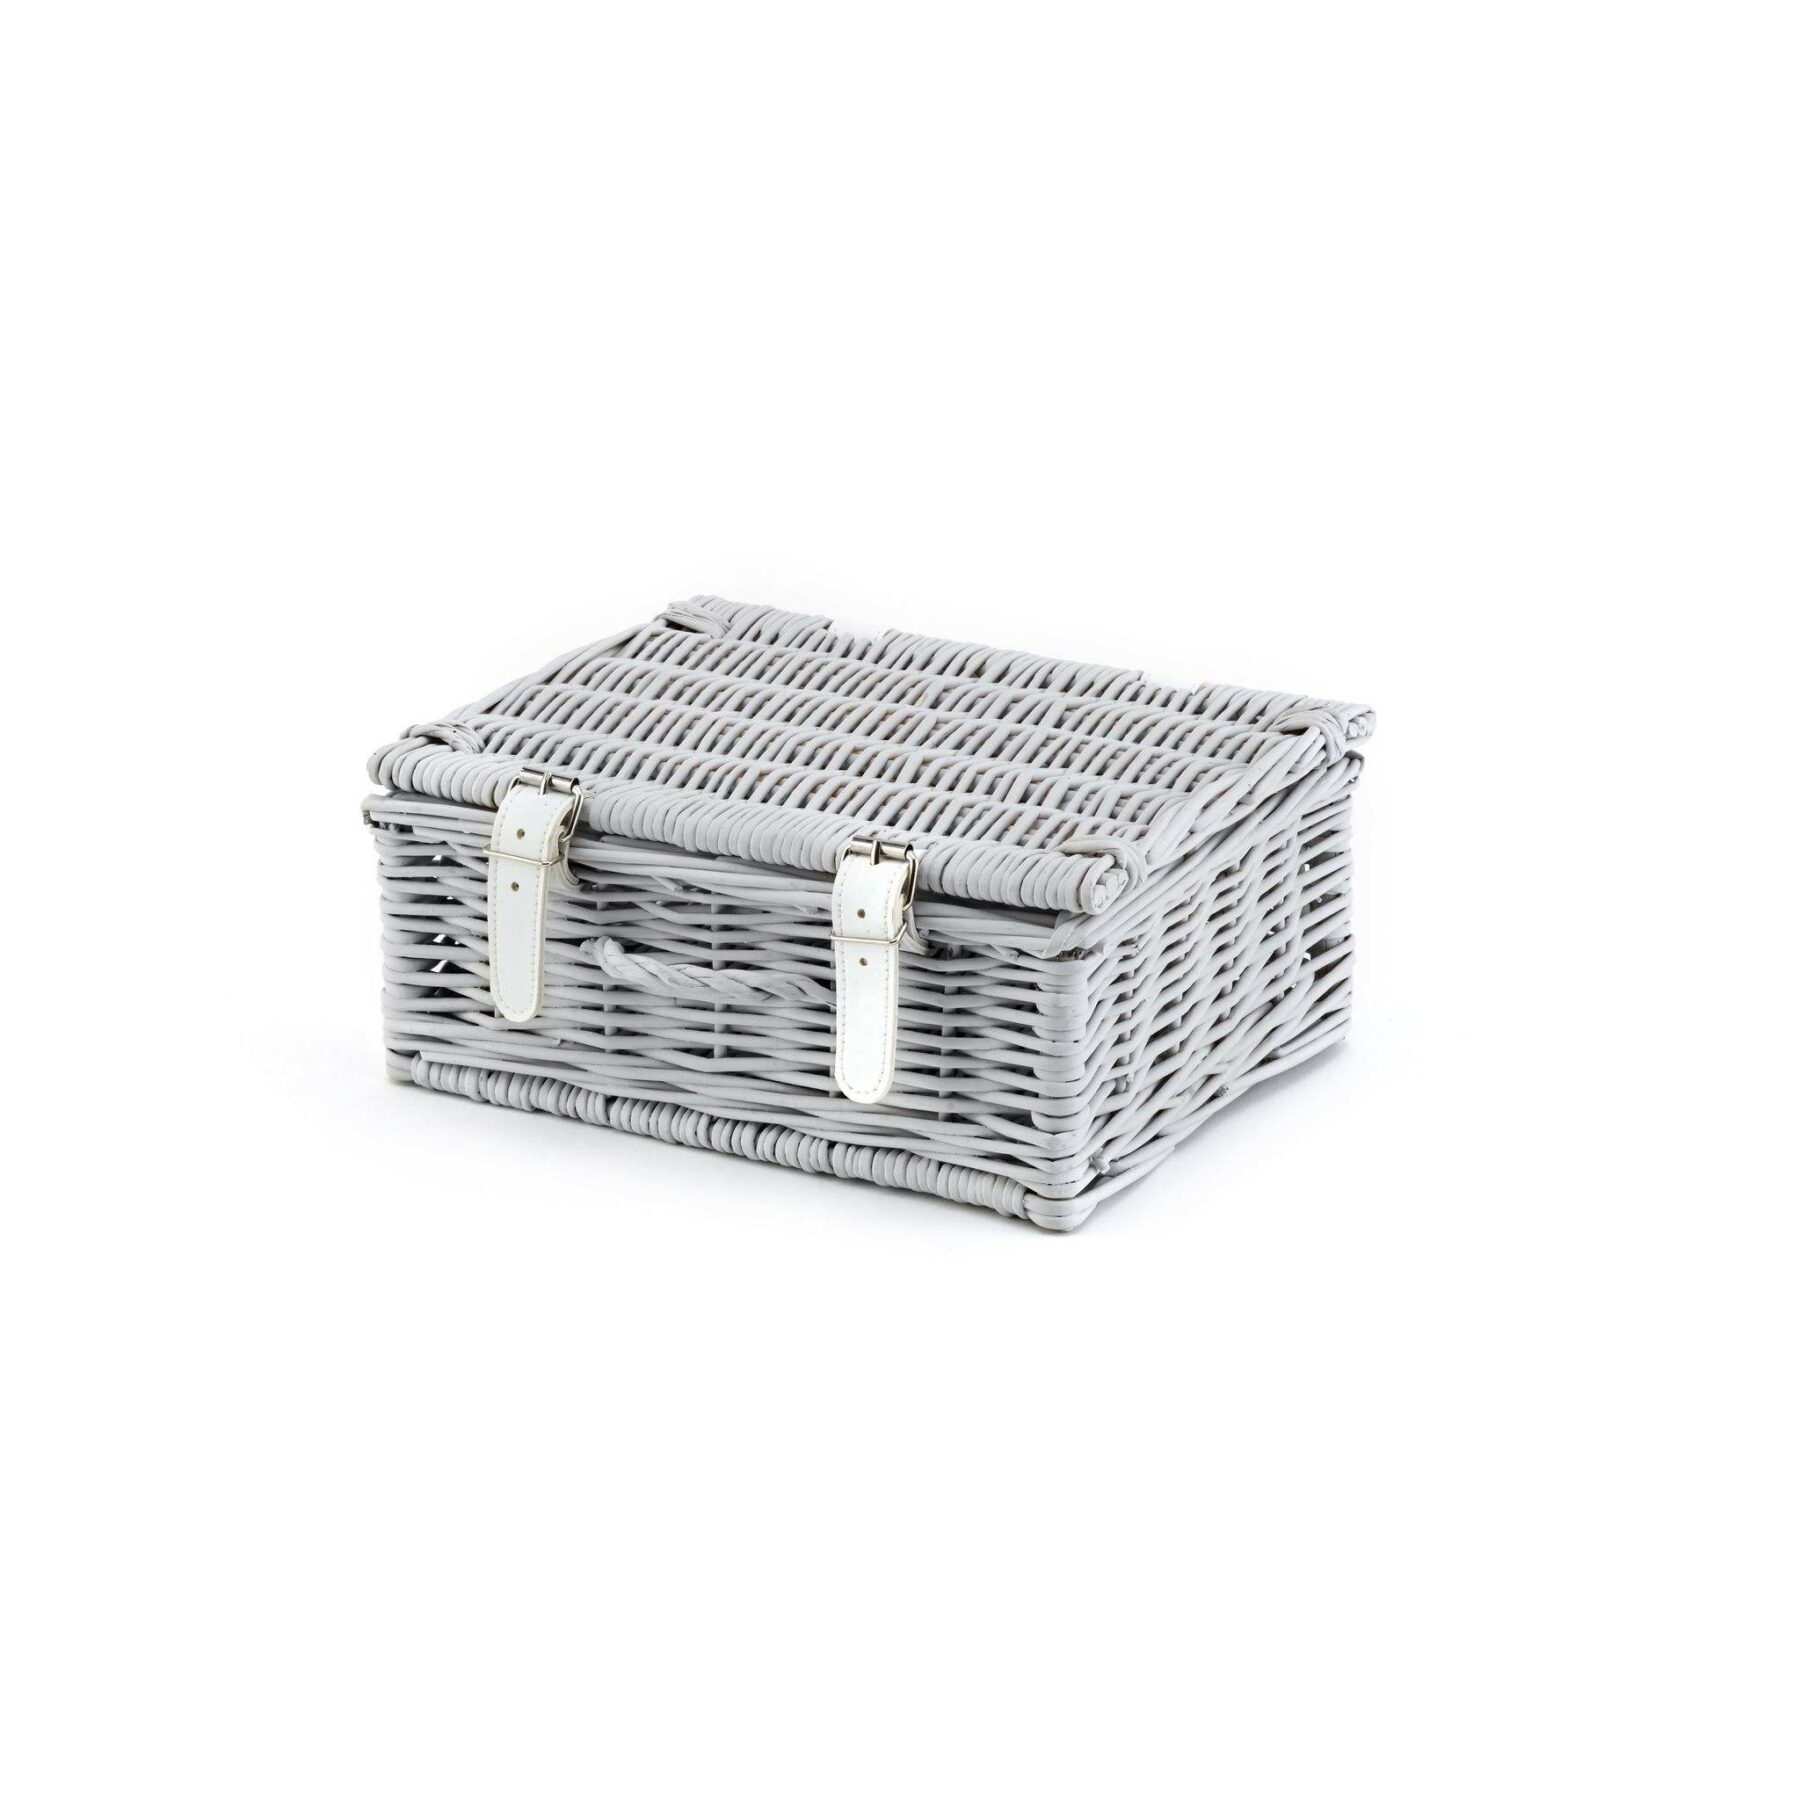 10 Inch Wicker Hamper Basket - Light Grey - Image 1